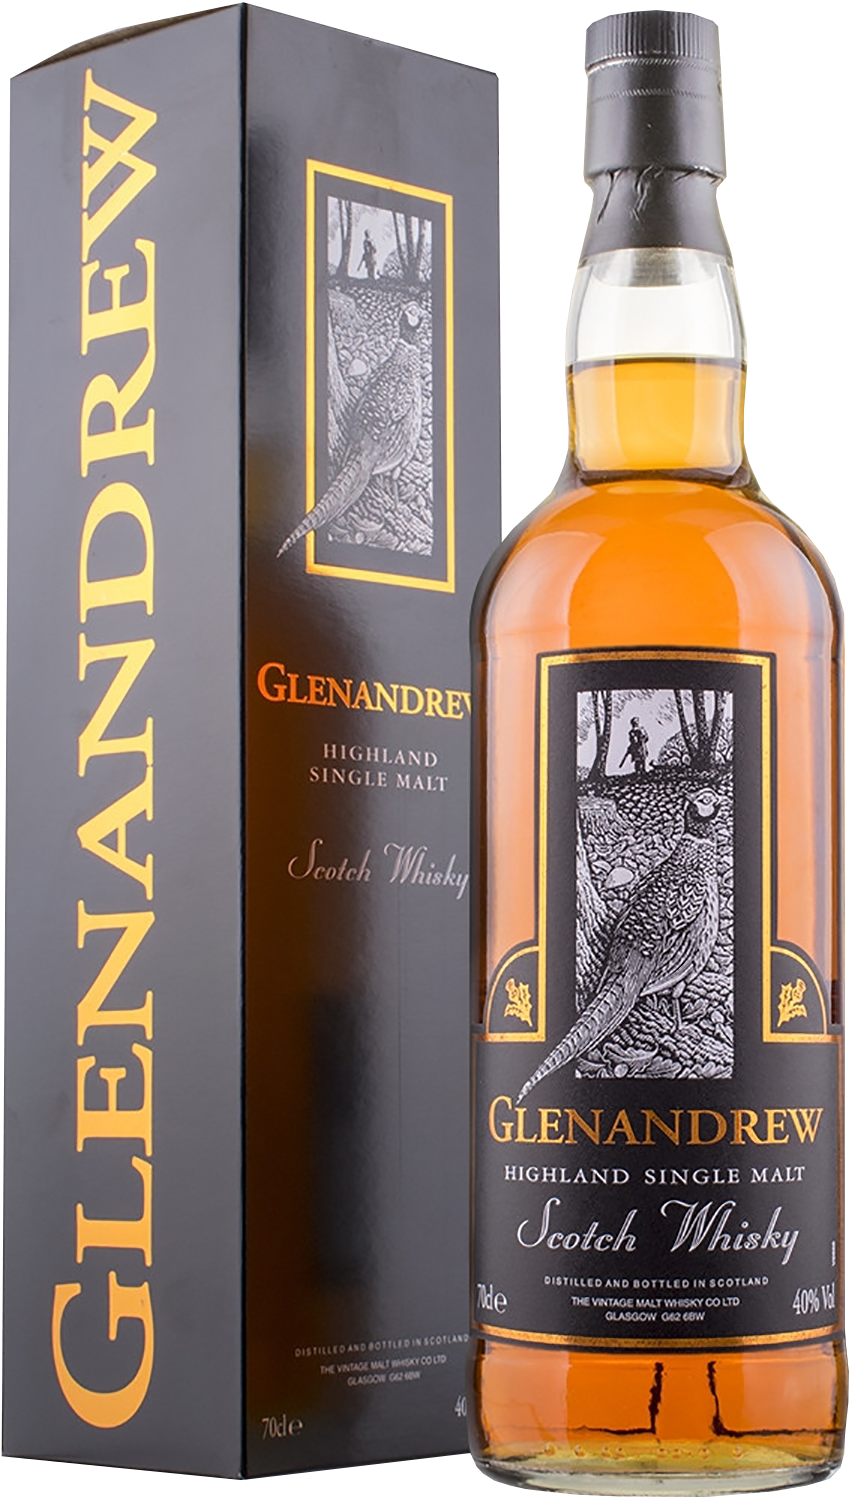 highland queen majesty single malt scotch whisky 16 y o gift box Glenandrew Highland Single Malt Scotch Whisky (gift box)